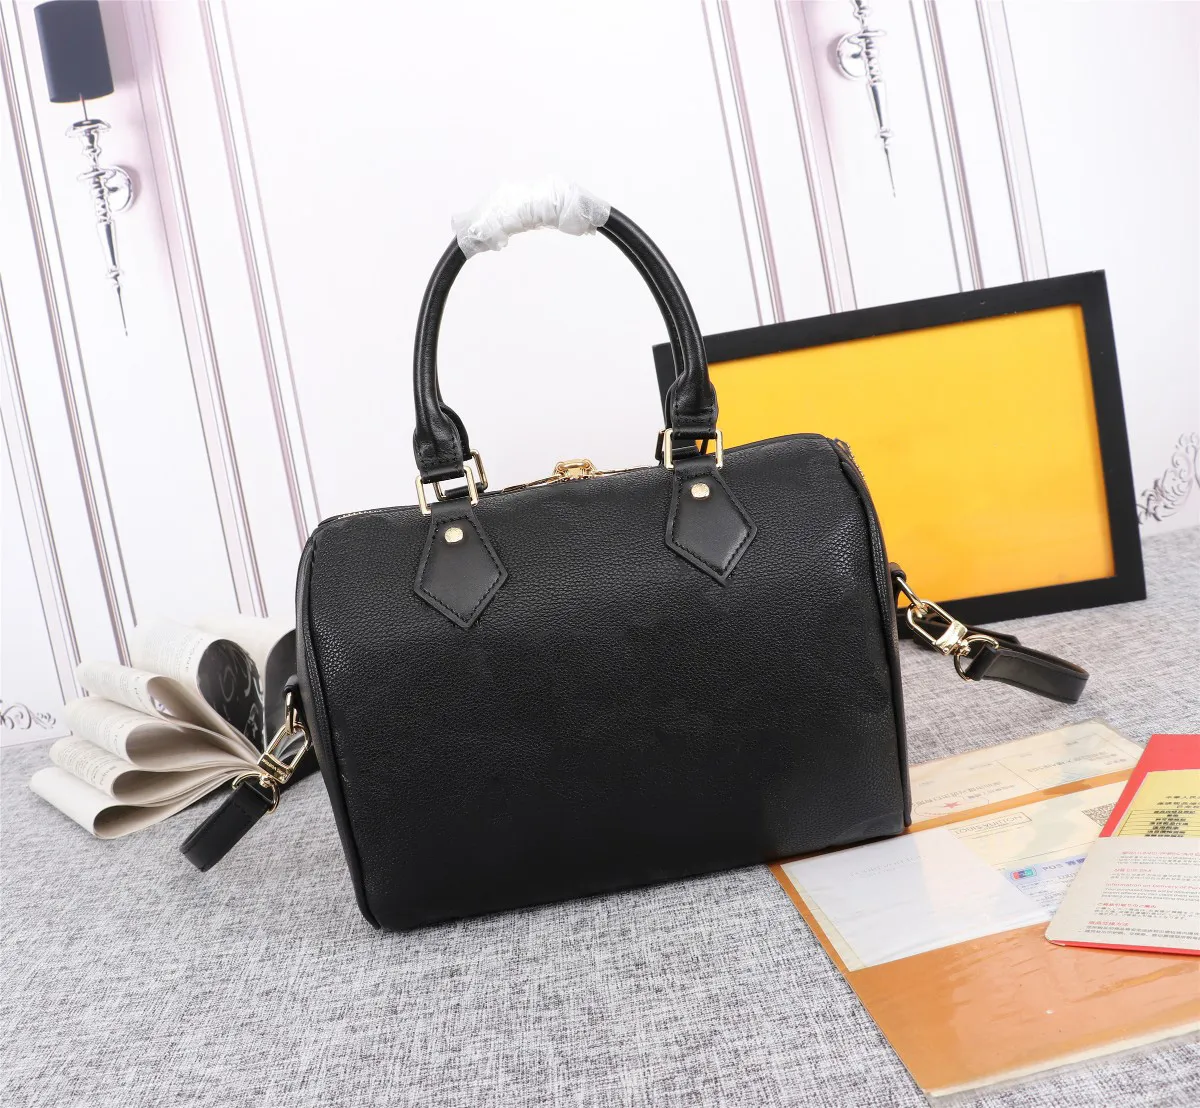 New Shopping Bag Full leather embossing High Quality Tote Handbag women bags Shoulder Bag264p